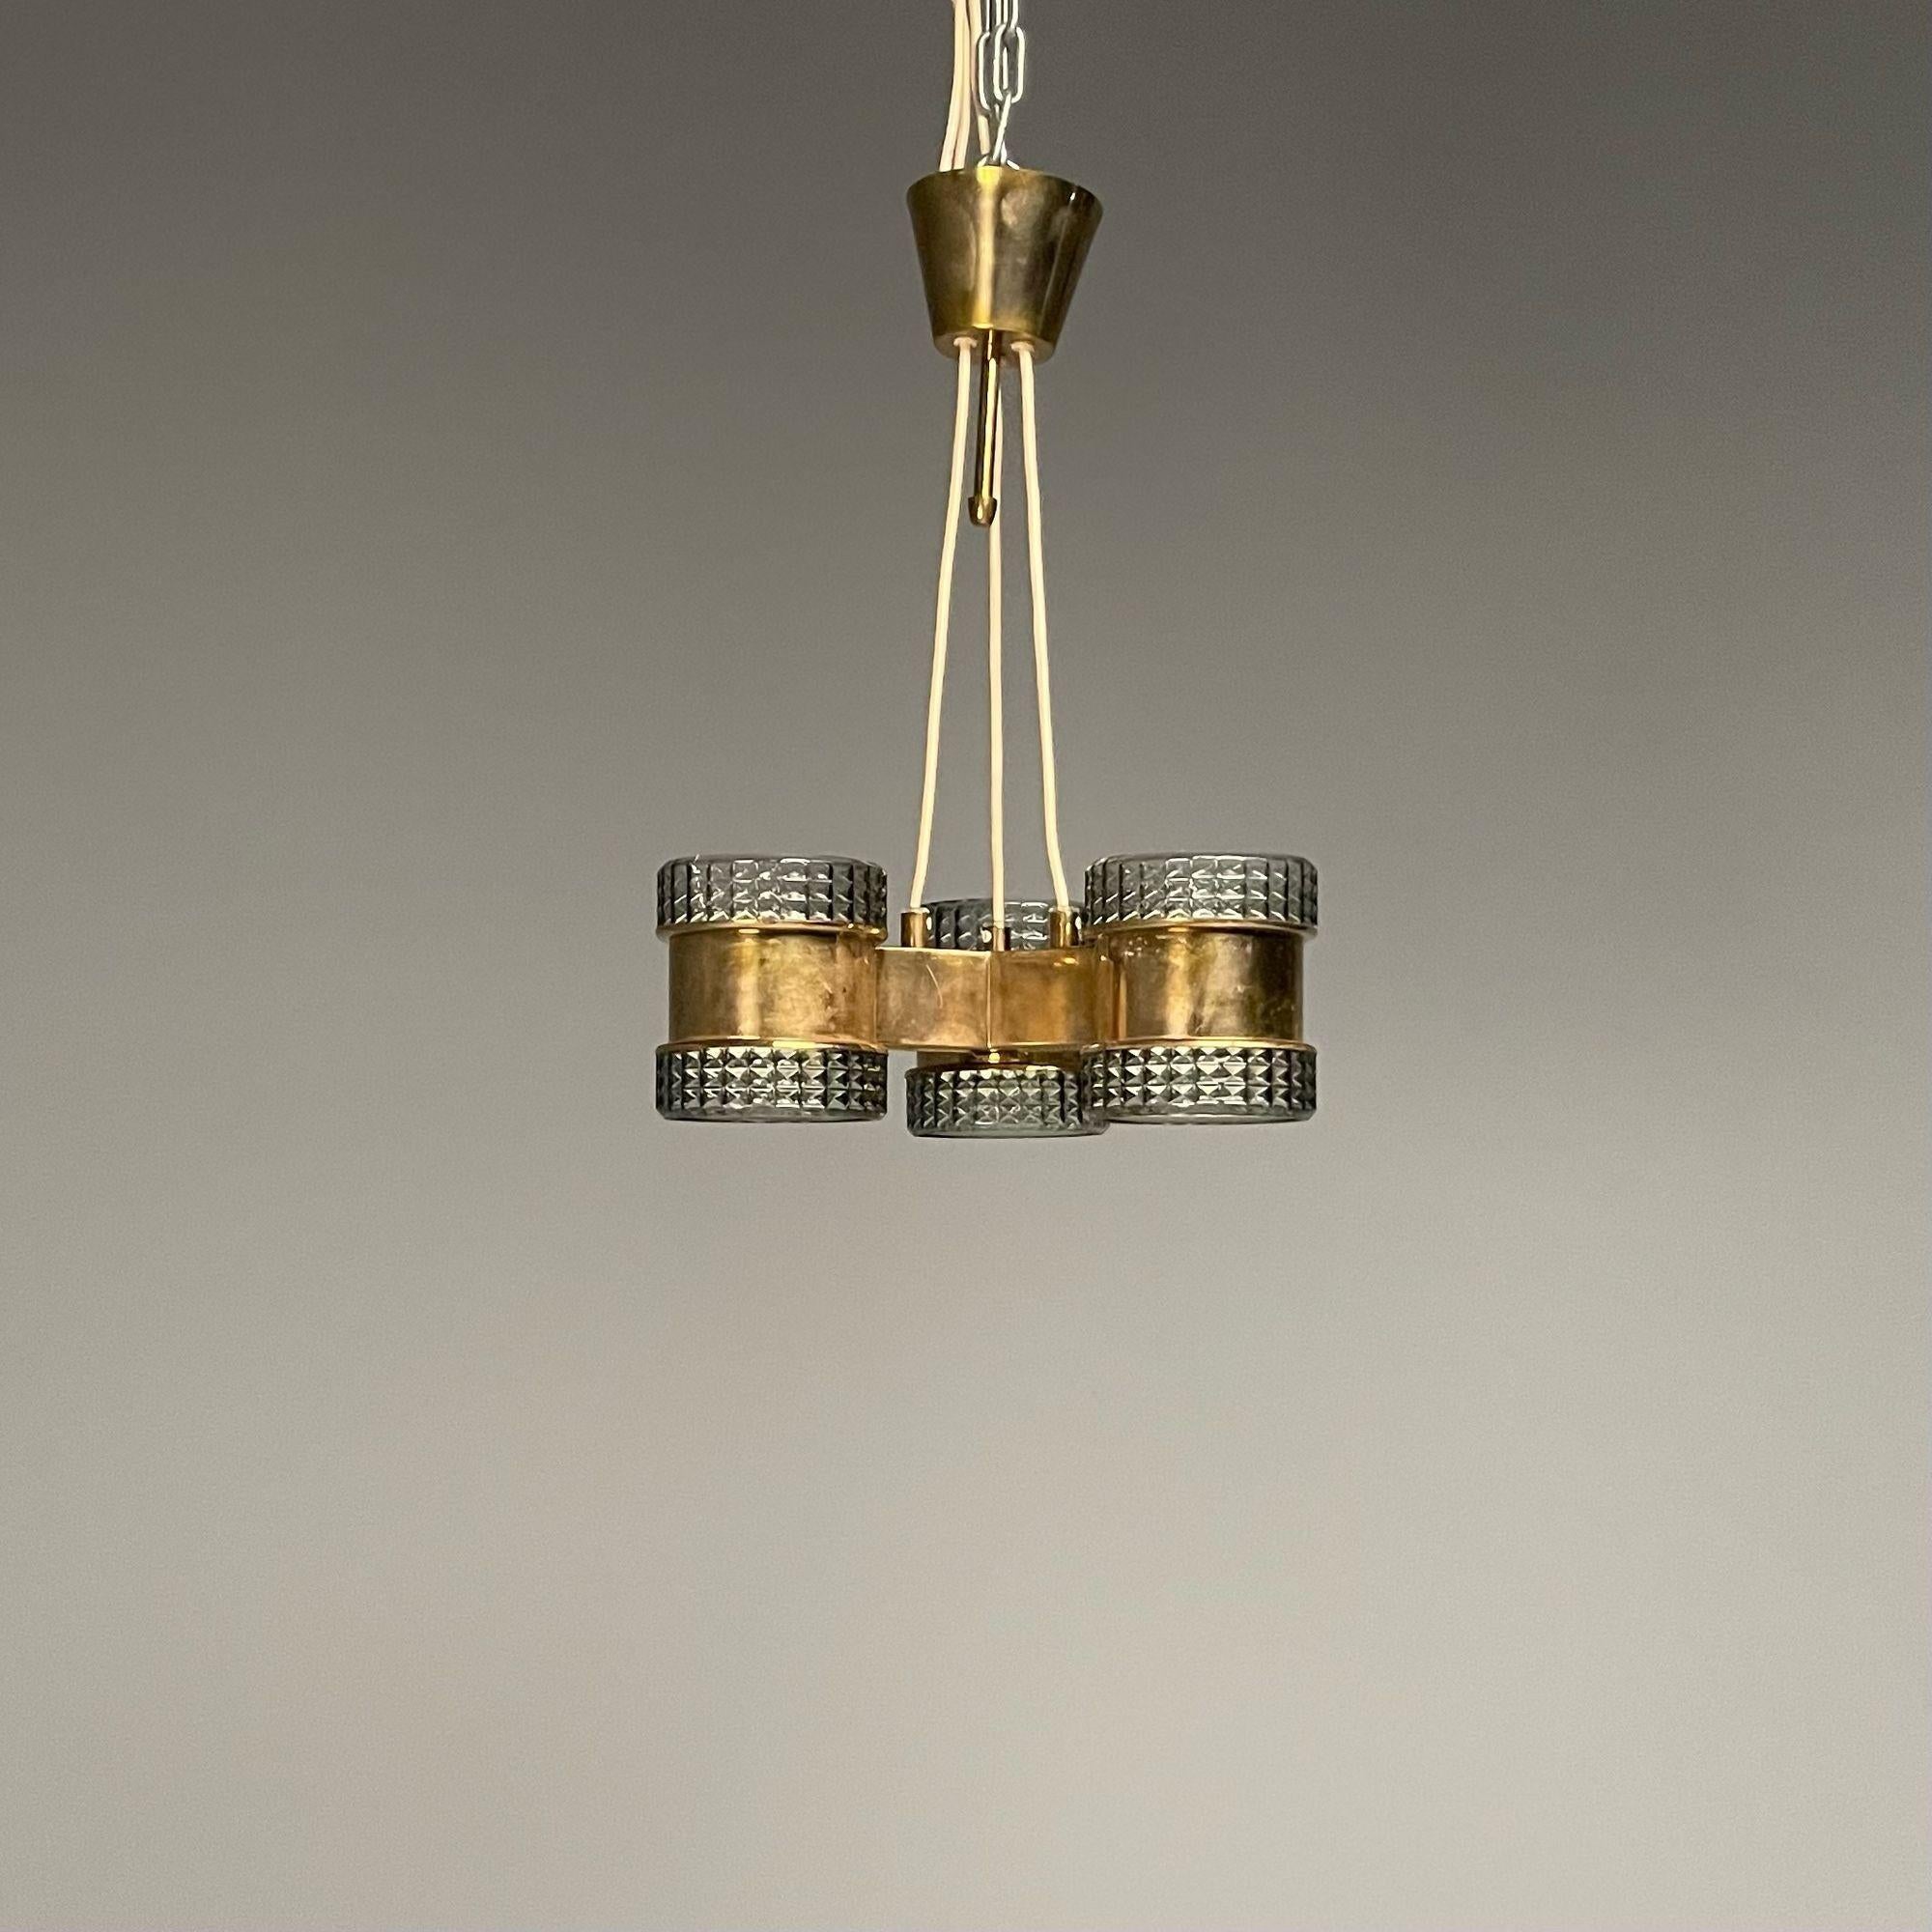 Mid-20th Century Swedish Mid-Century Modern, Pendant, Glass, Brass, Sweden, 1950s For Sale